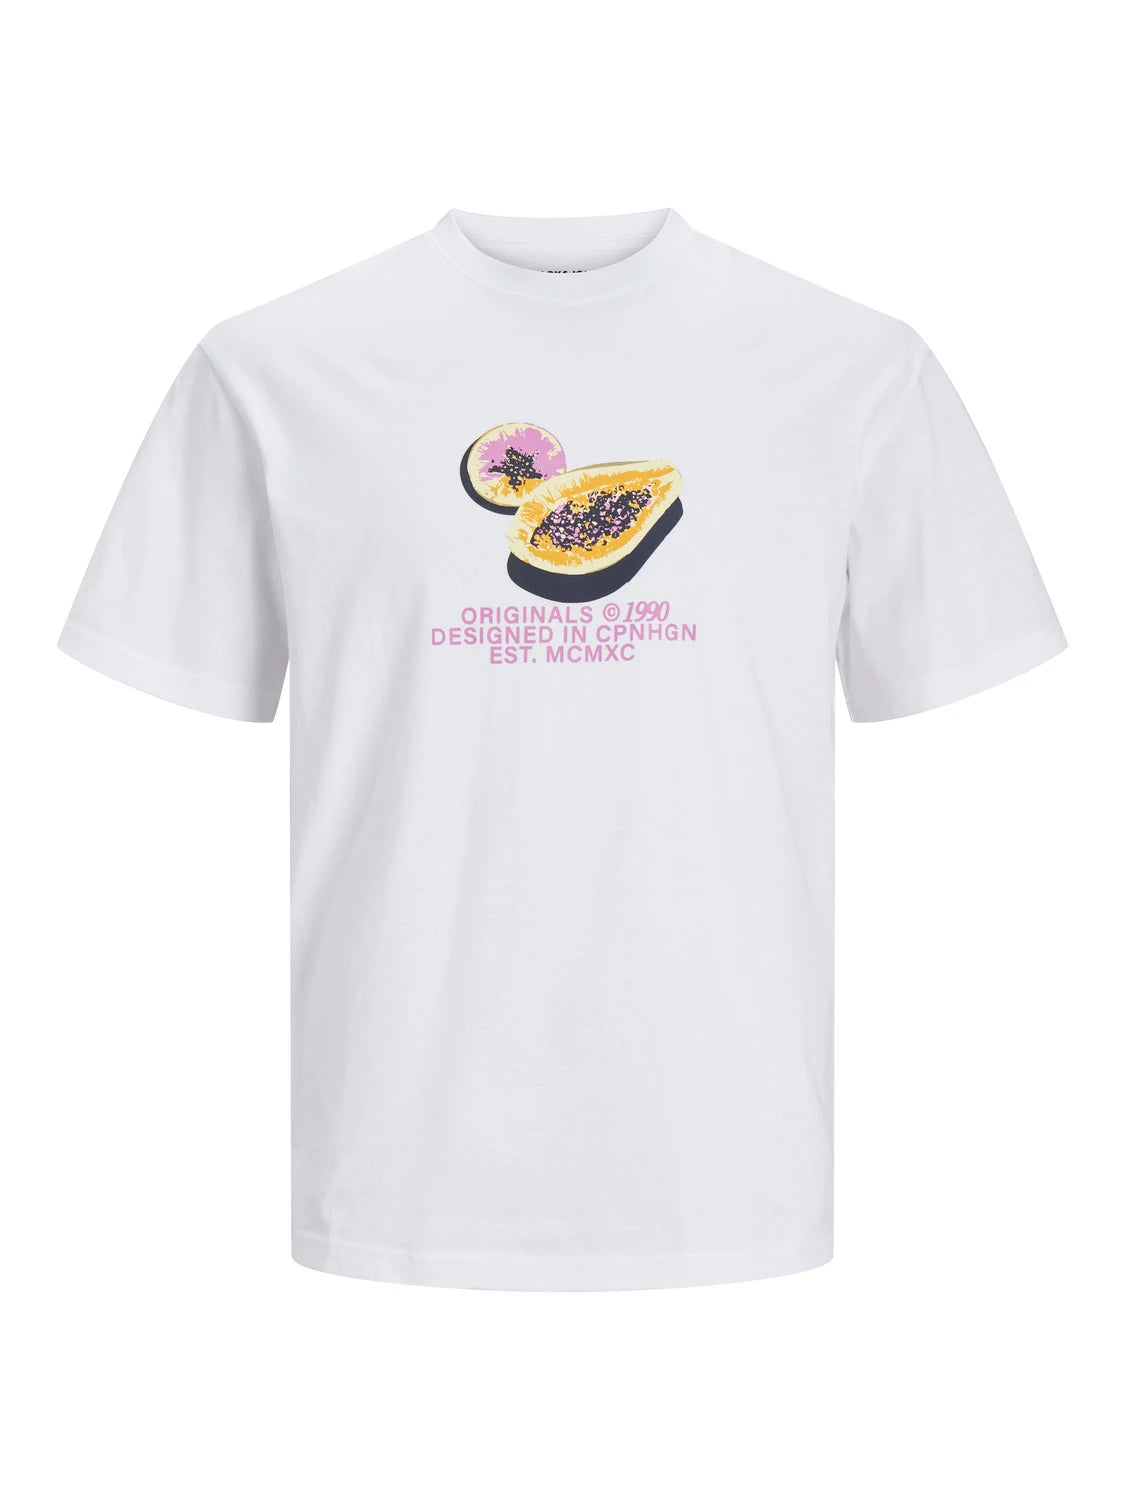 Jack & Jones | Printed Crew Neck T-Shirt | Bright White